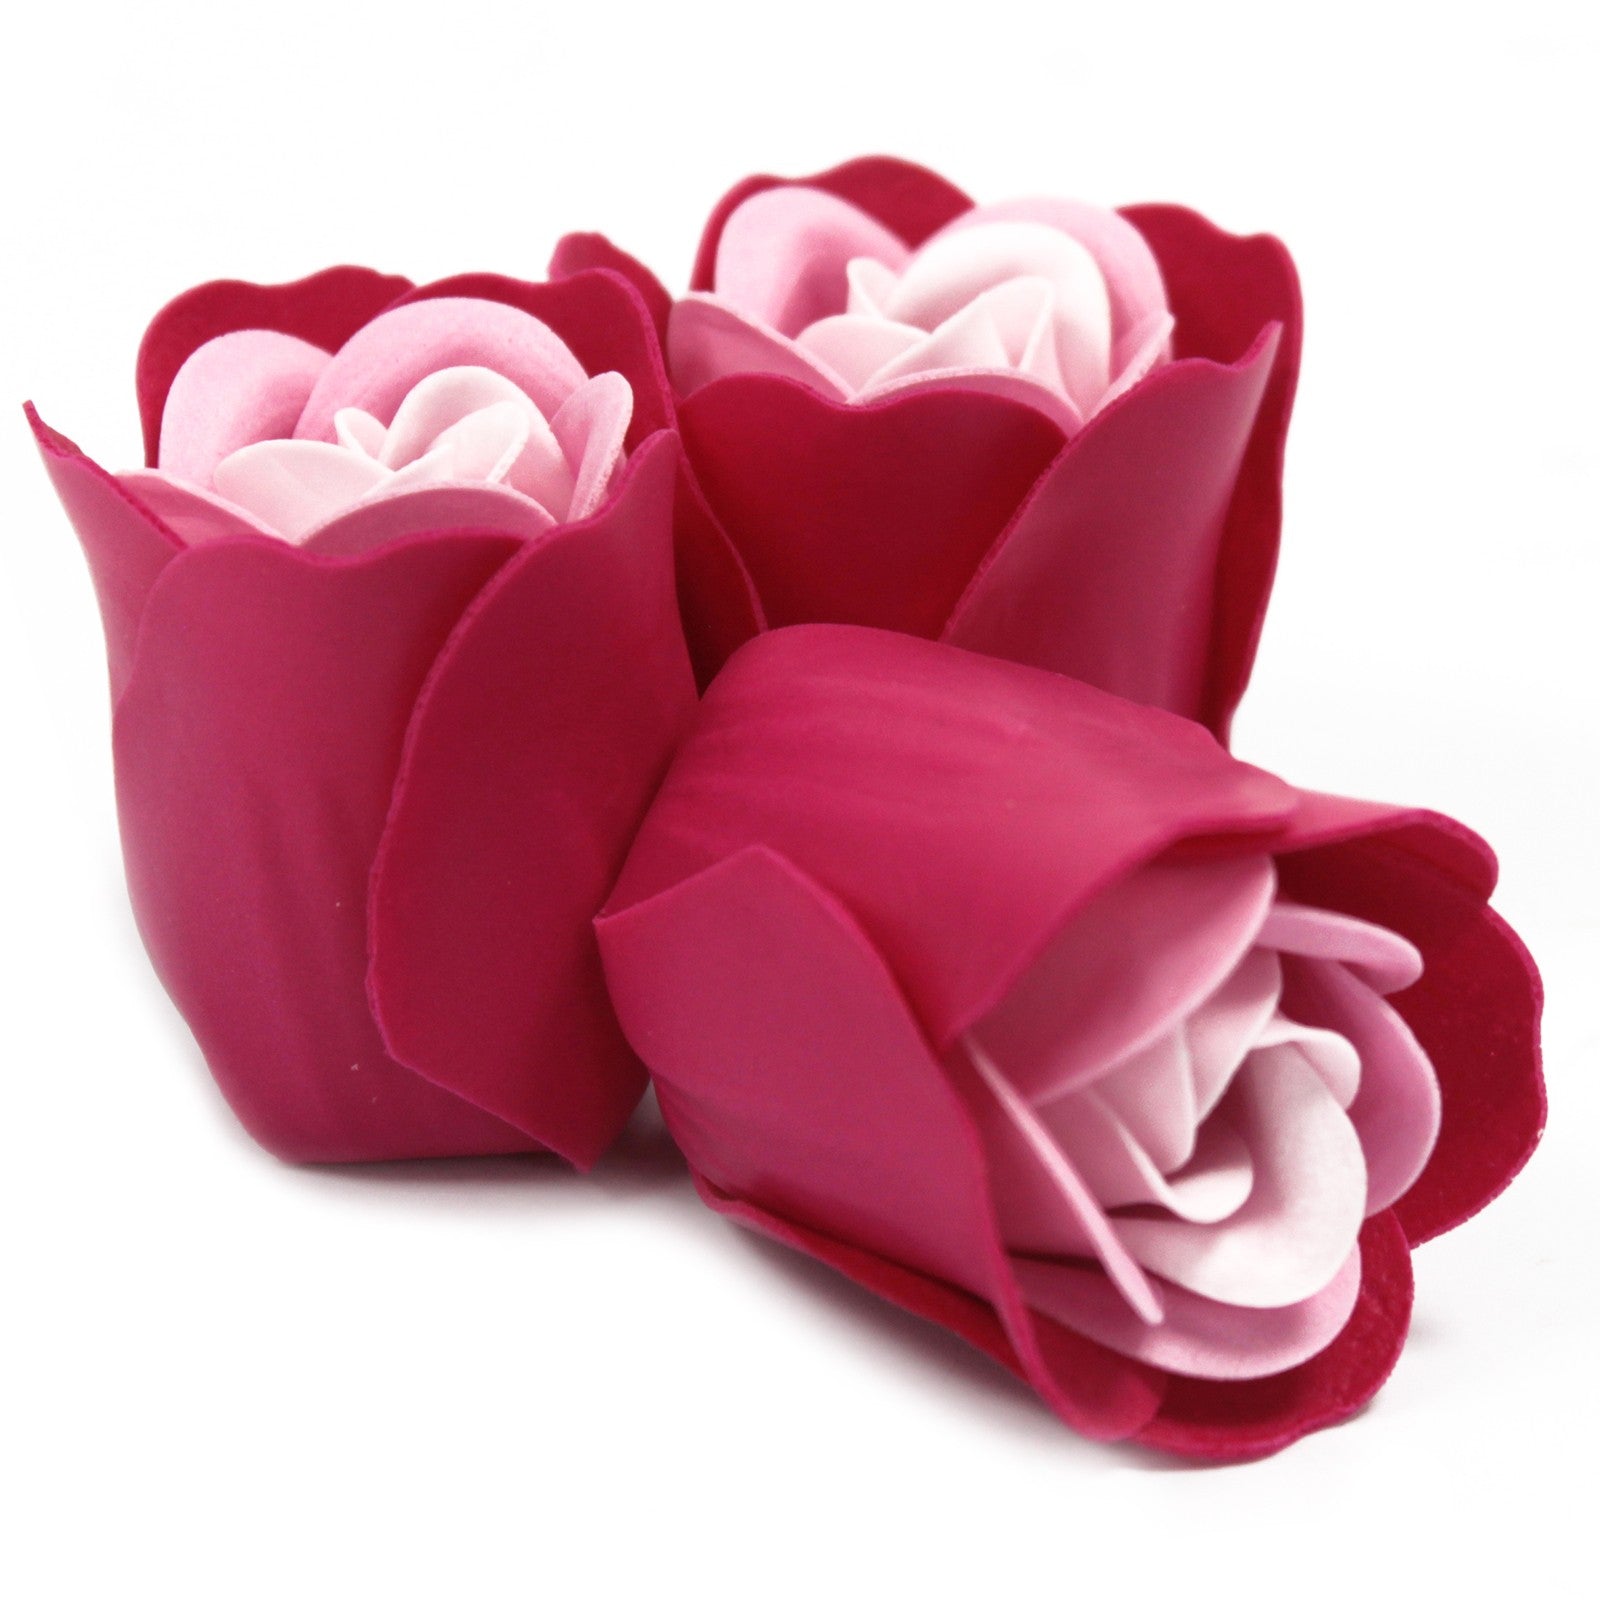 Soap Flower Heart Box - 3 Pink Roses